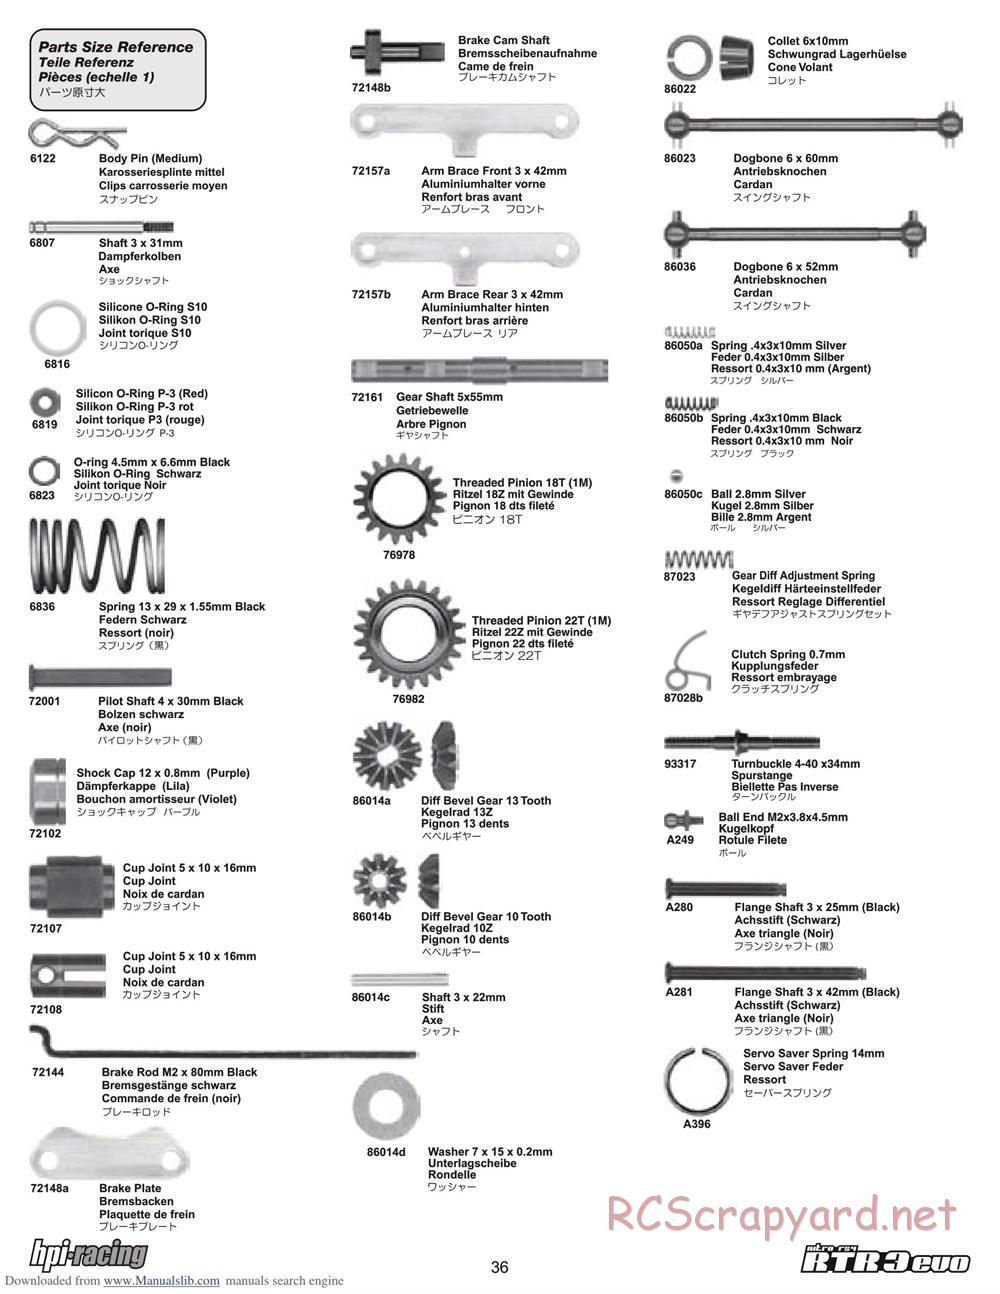 HPI - Nitro RS4 3 Evo - Manual - Page 36